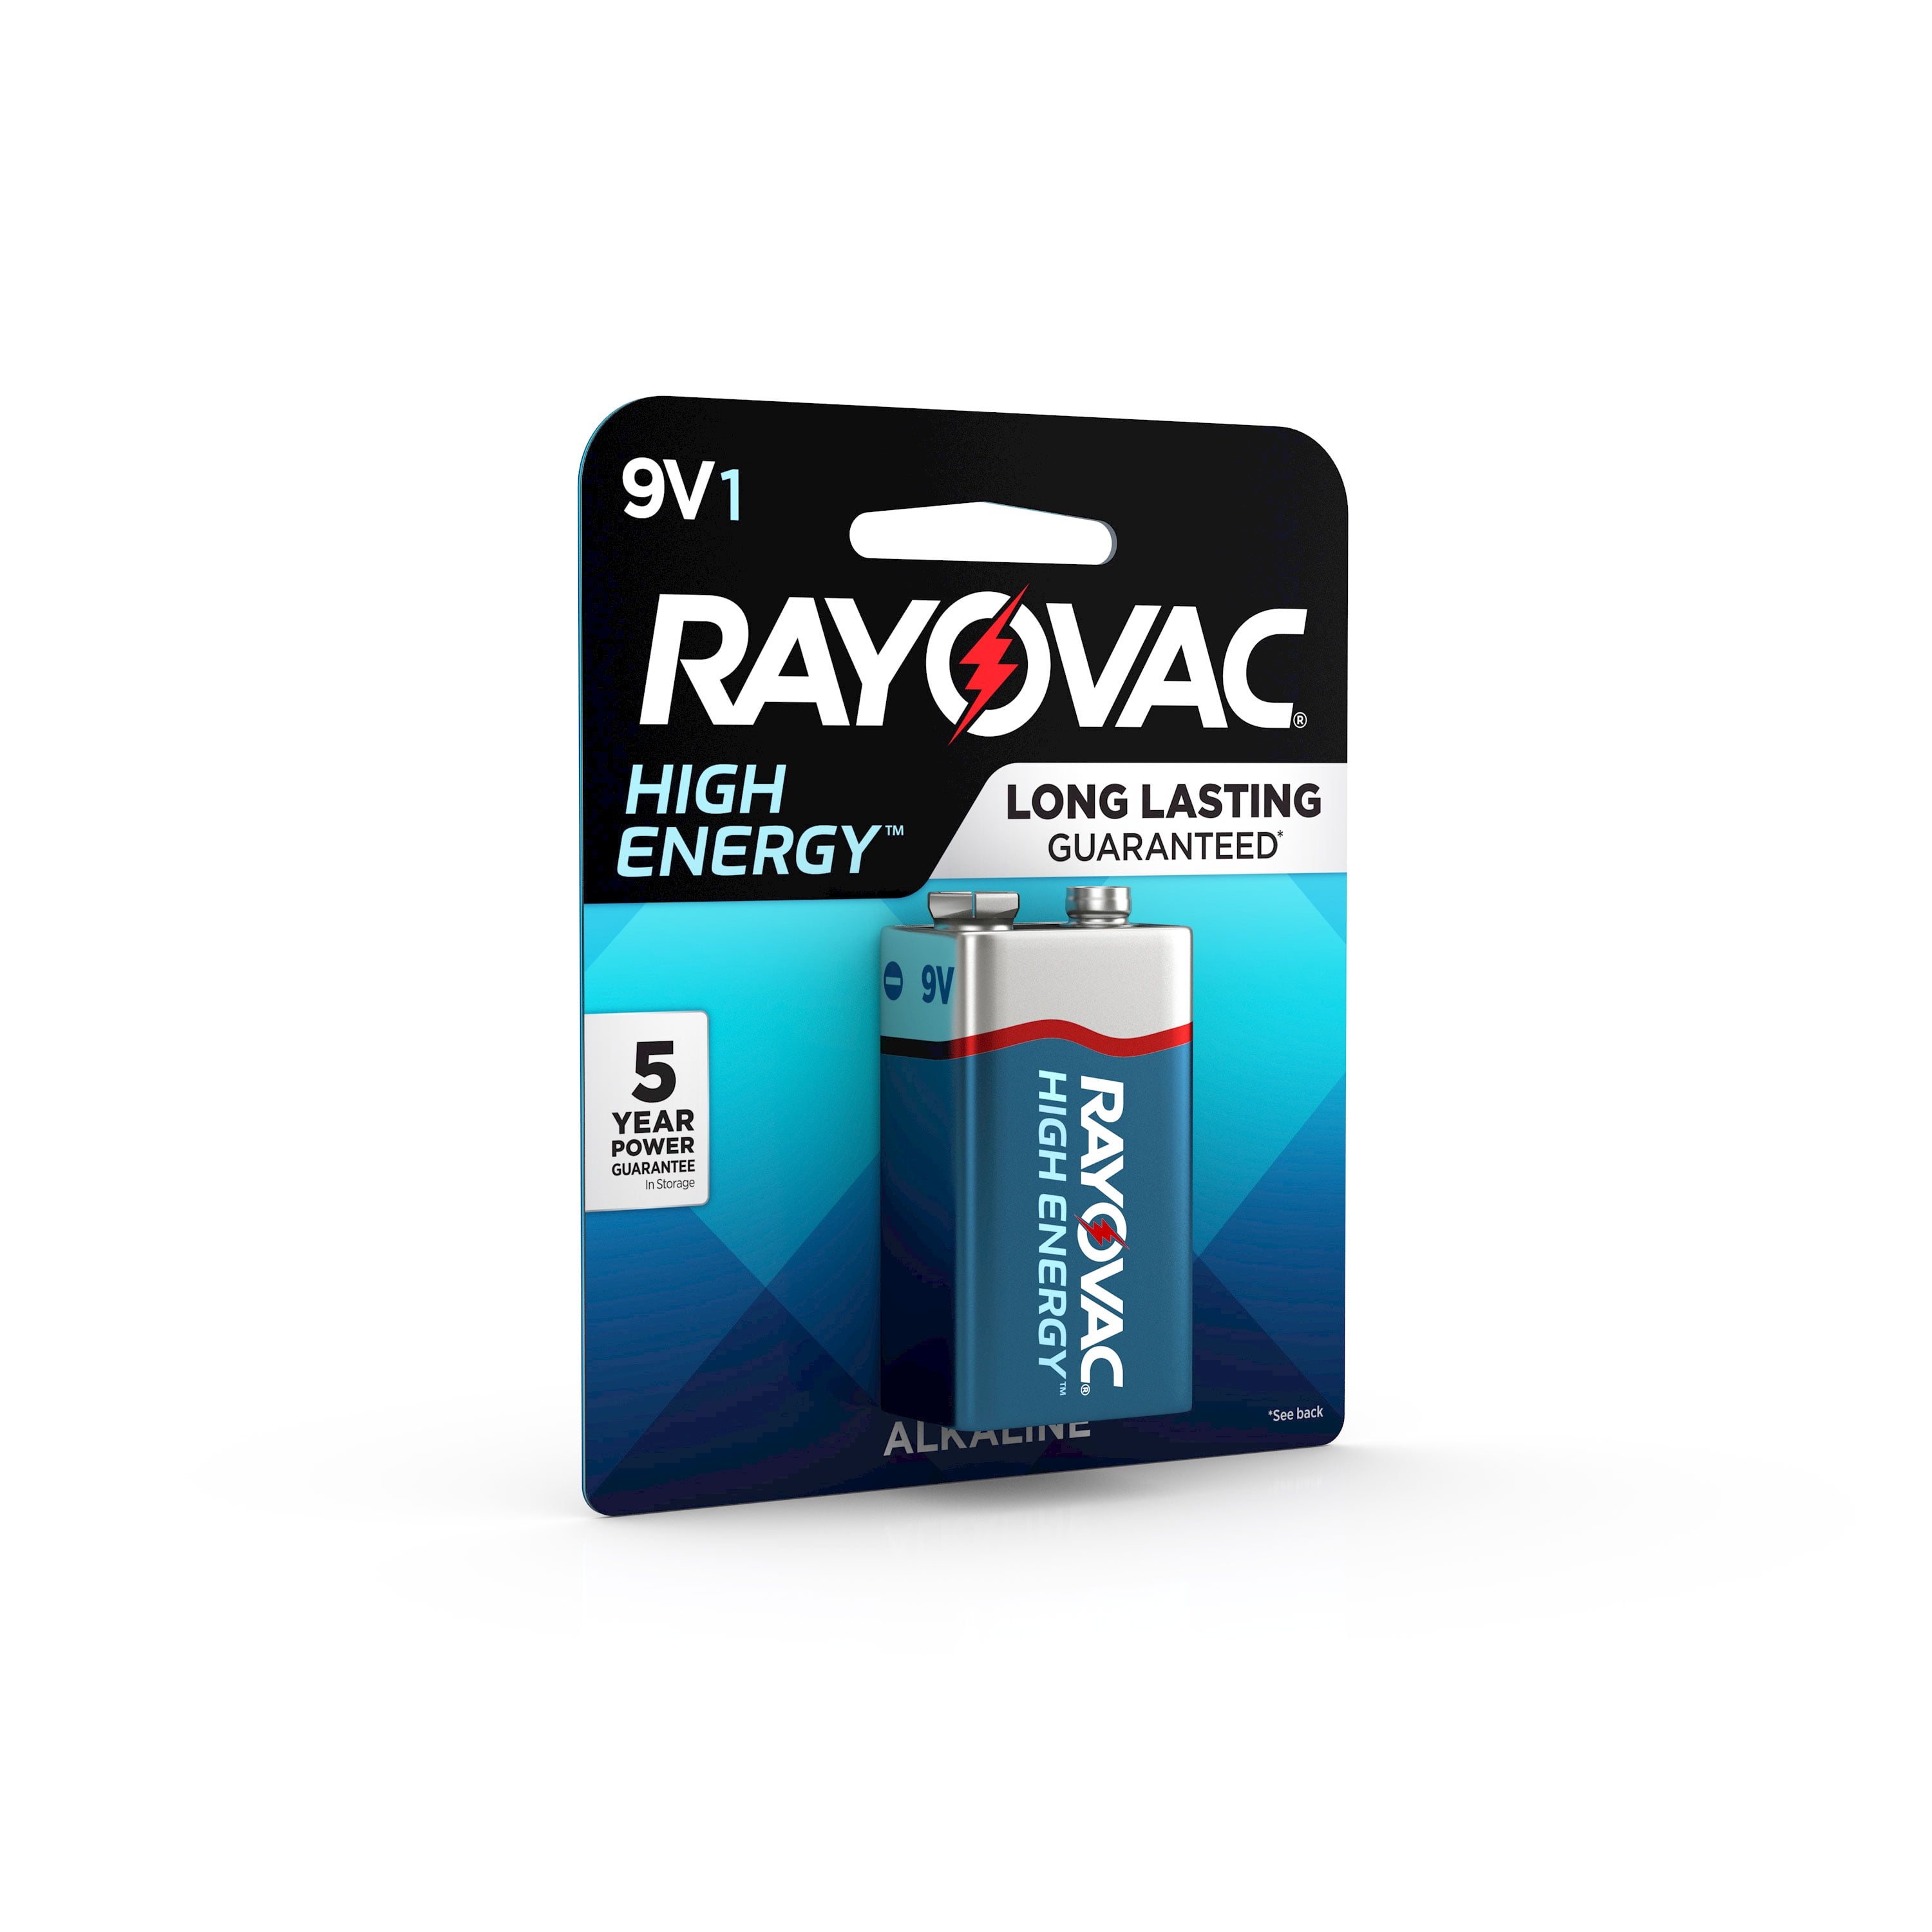 Rayovac High Energy Alkaline 9v Batteries 1 Count